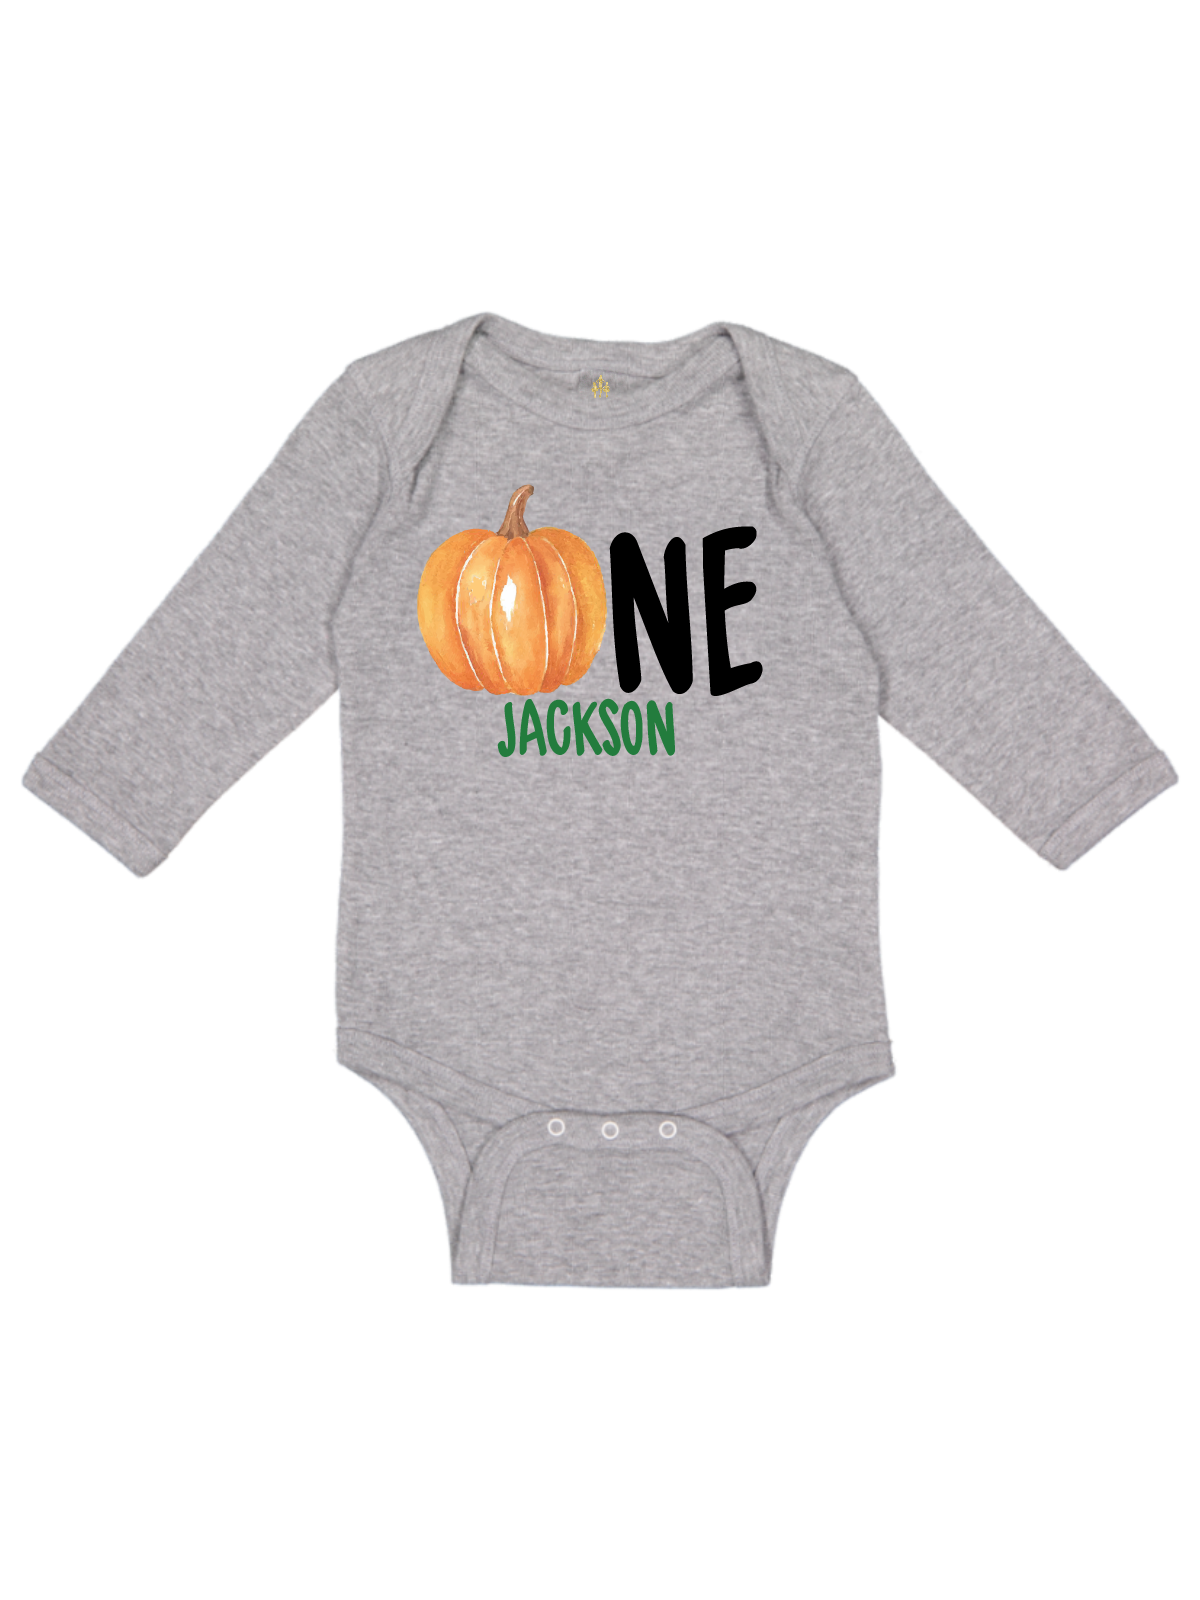 ONE pumpkin baby bodysuit in gray long sleeve